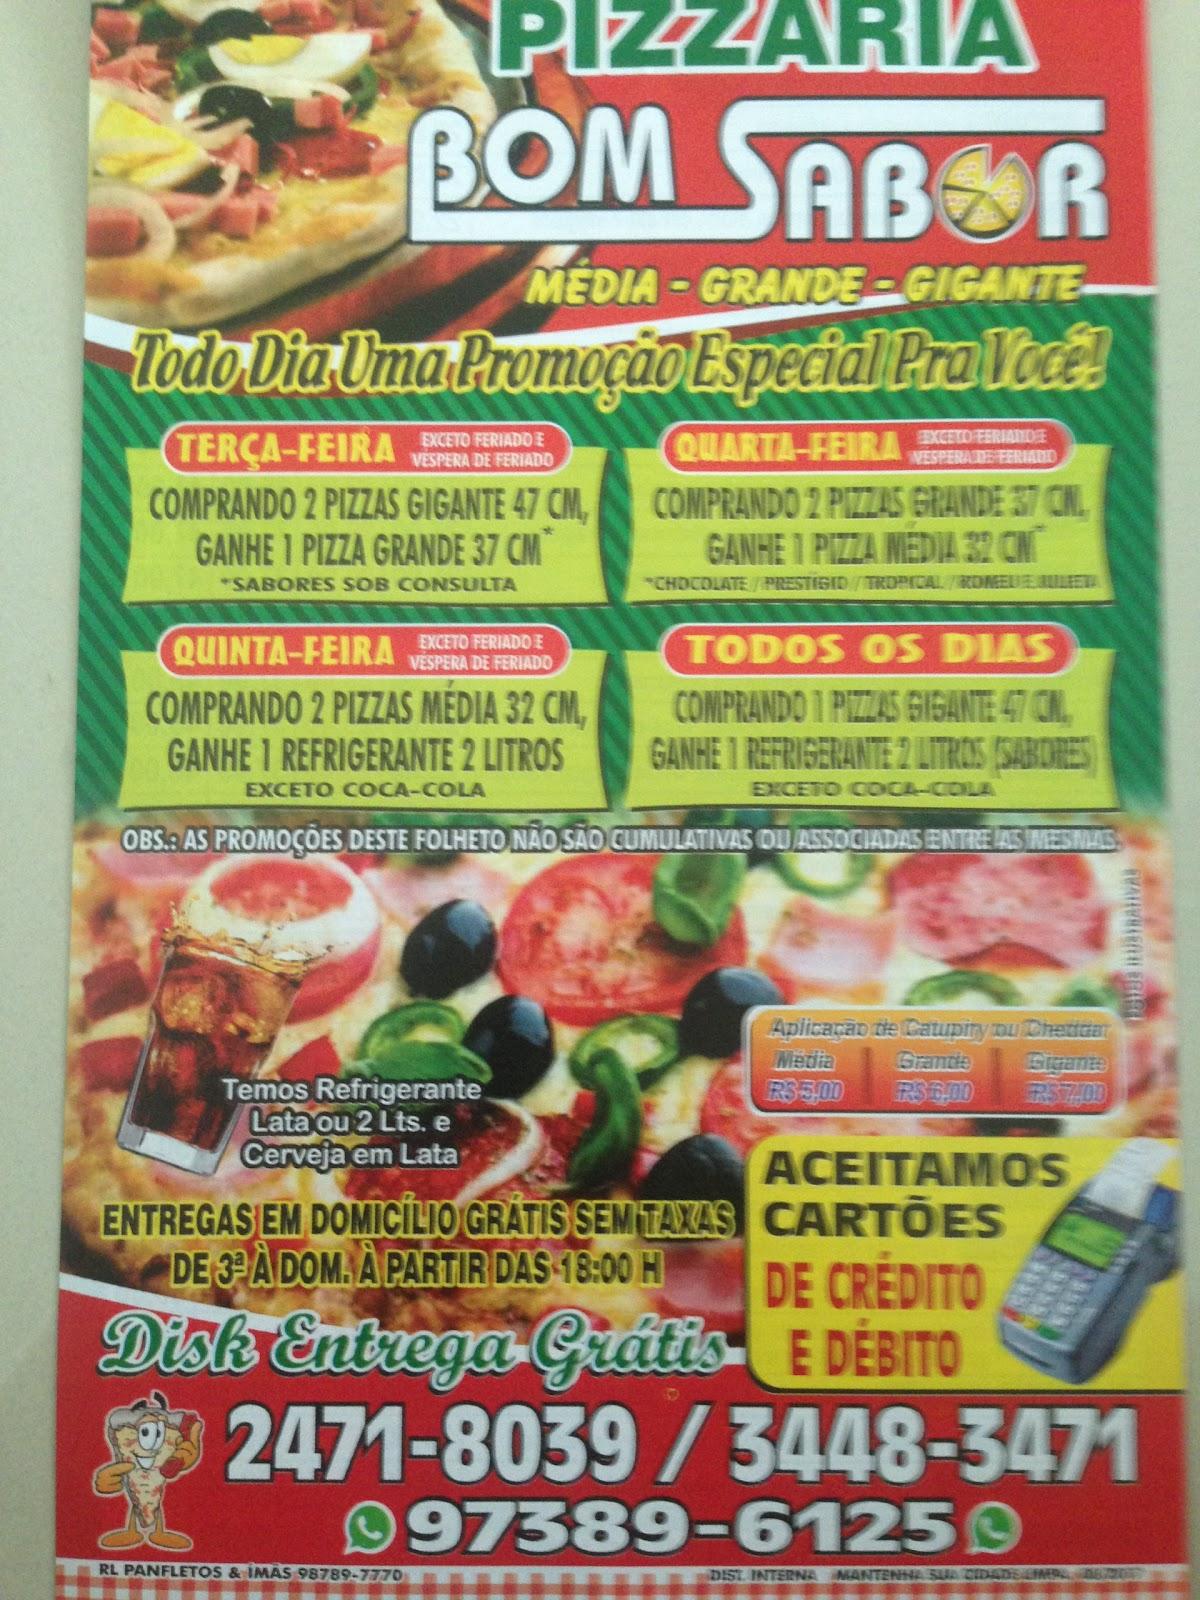 DISK PIZZA 2030-5662 - Picture of Pizzaria Bom Sabor, Tres Rios -  Tripadvisor